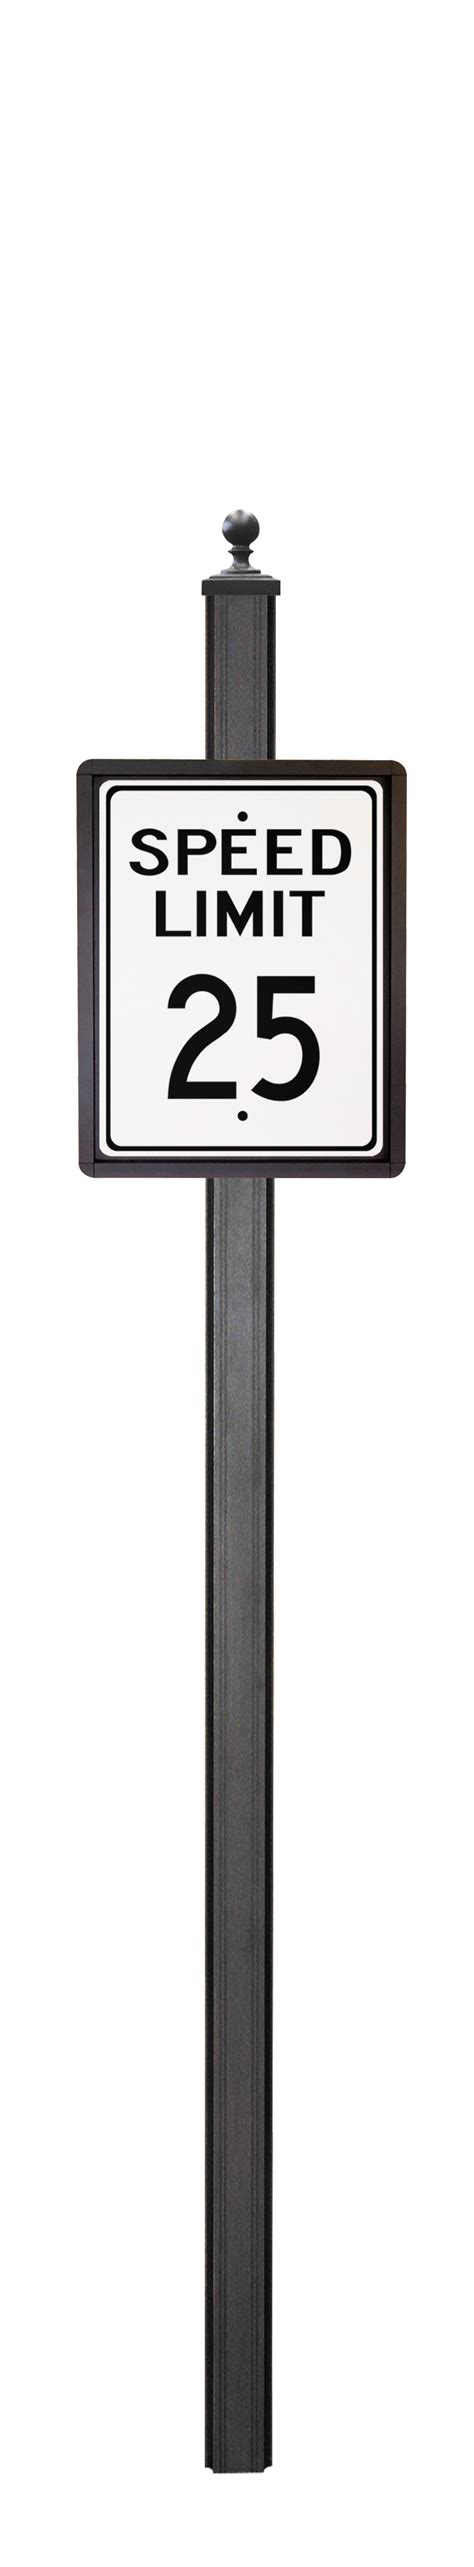 4 X 4 Square Street Sign Poles Main Street Series